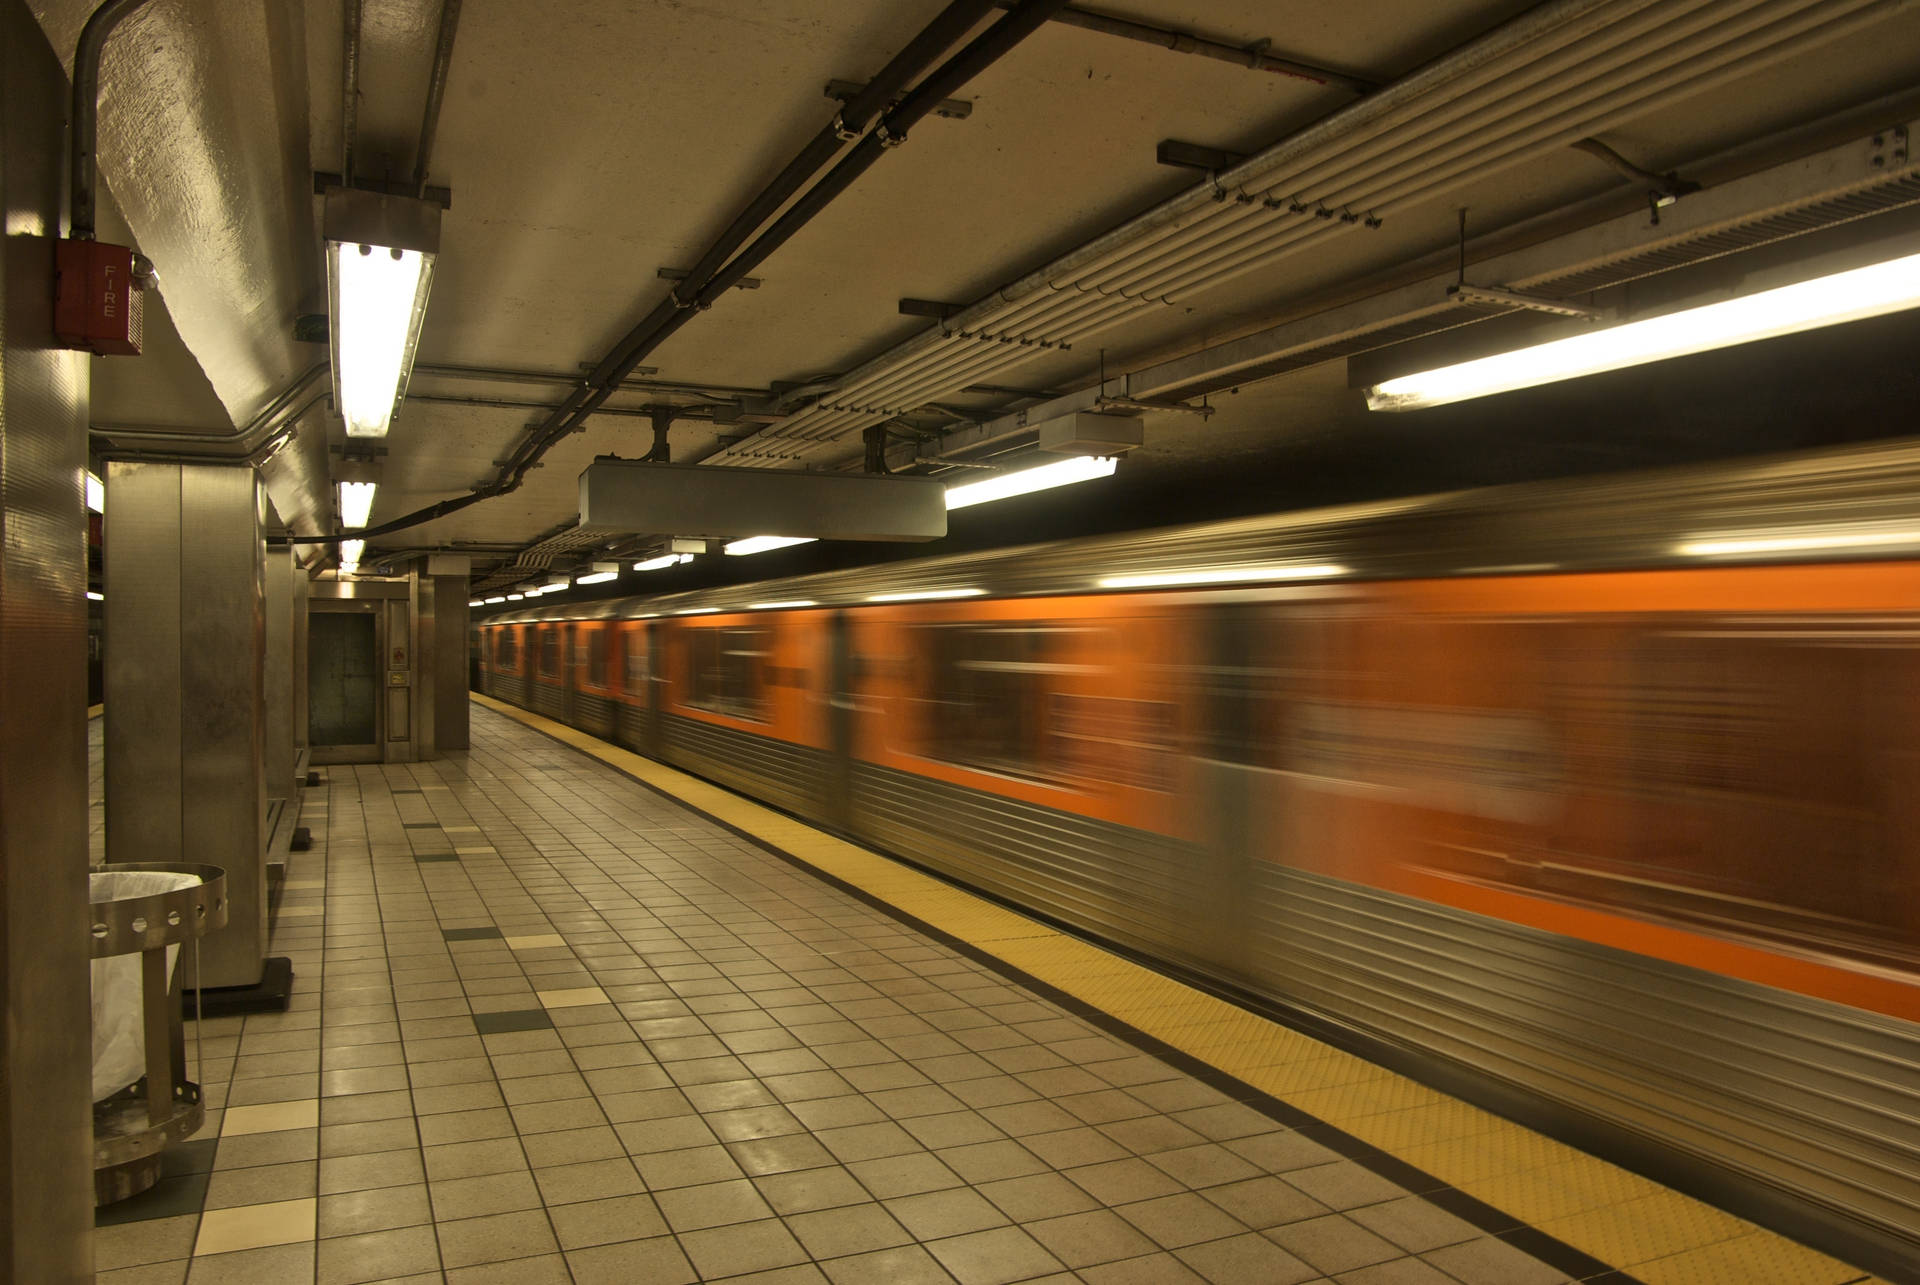 Tiled Subway Platform